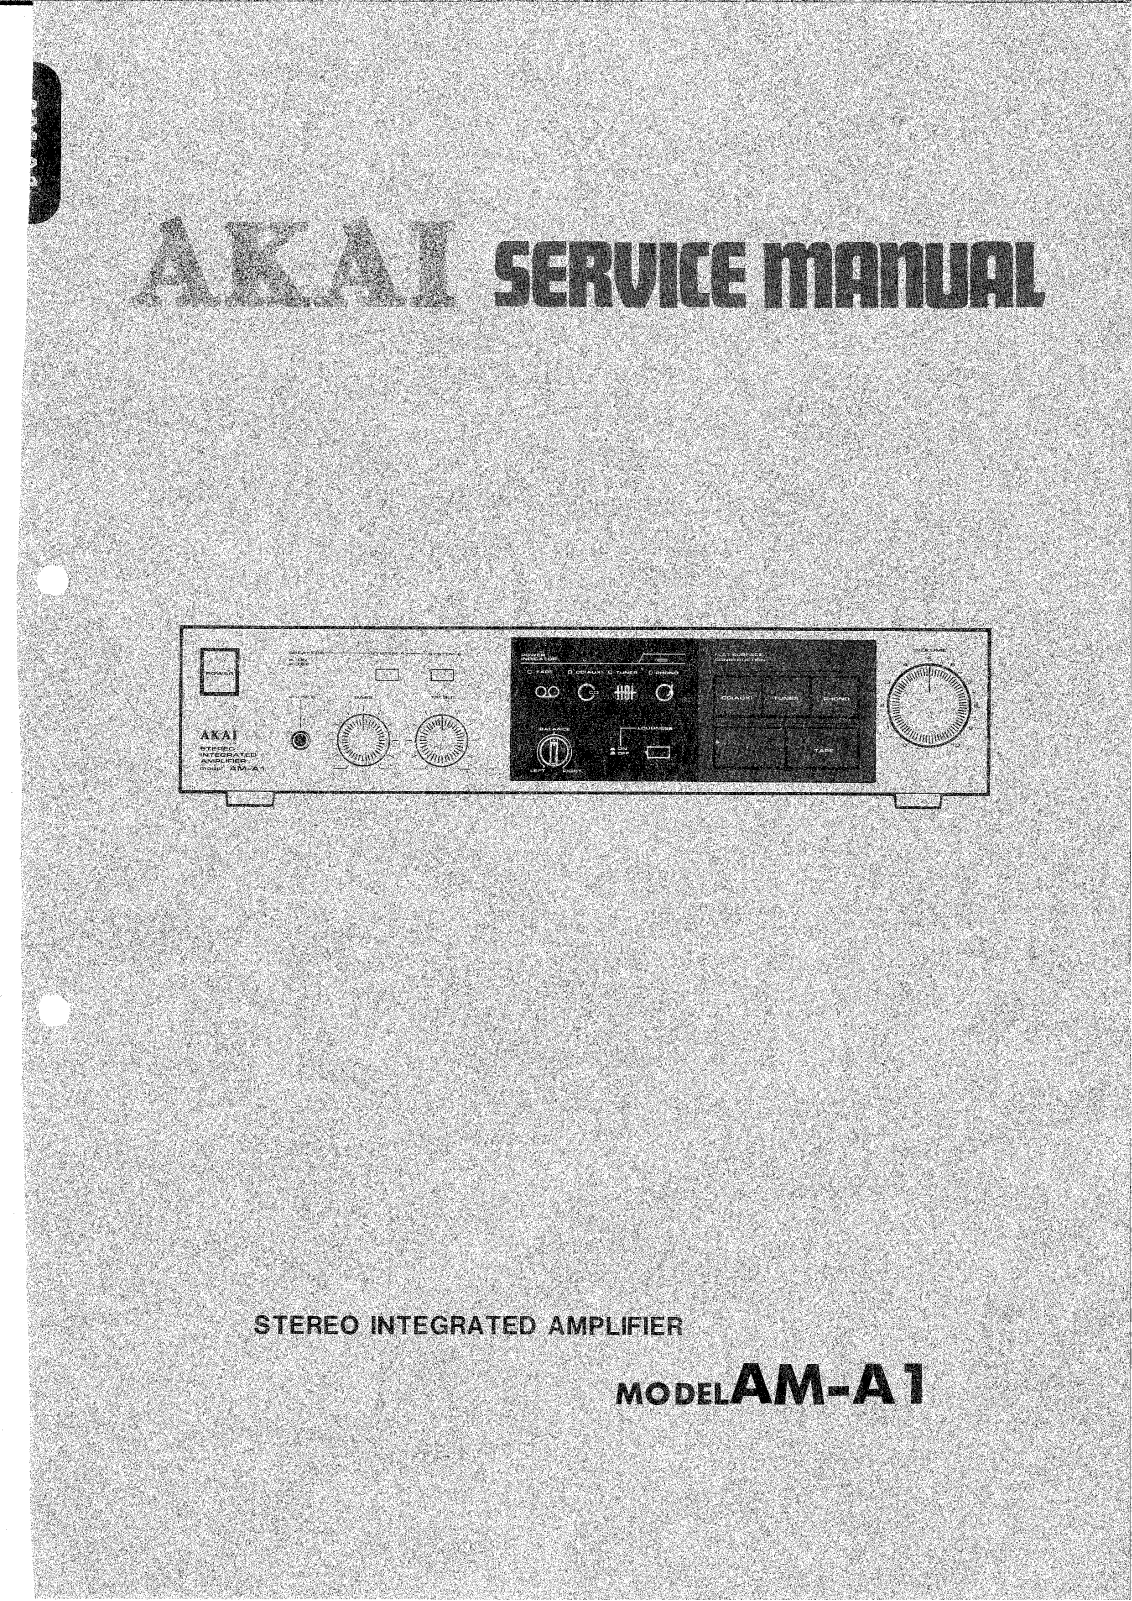 Akai AM-A1 Service Manual